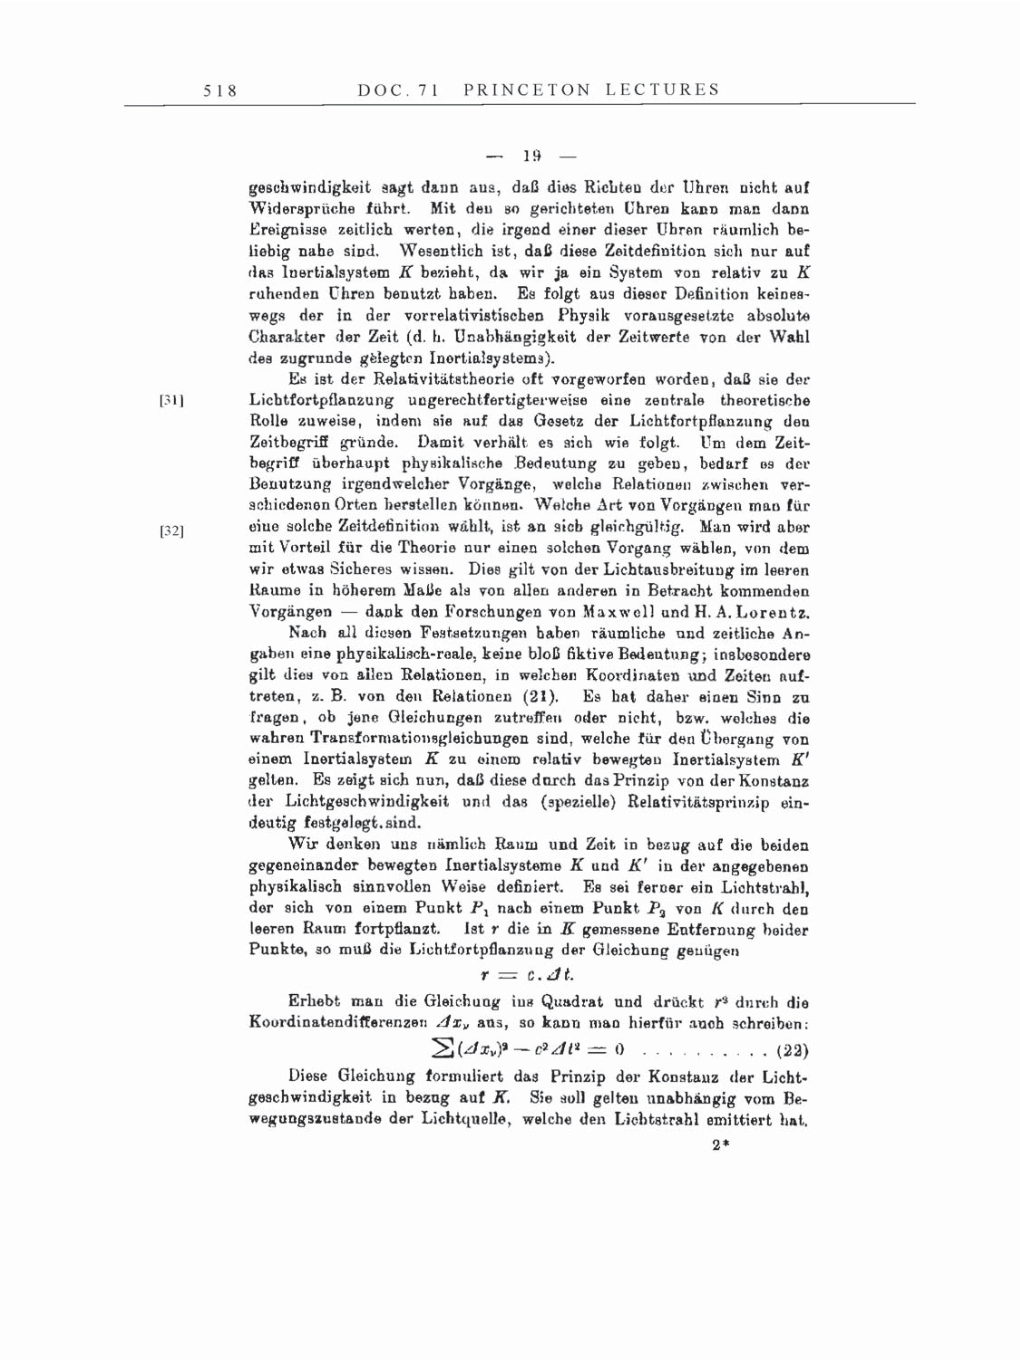 Volume 7: The Berlin Years: Writings, 1918-1921 page 518